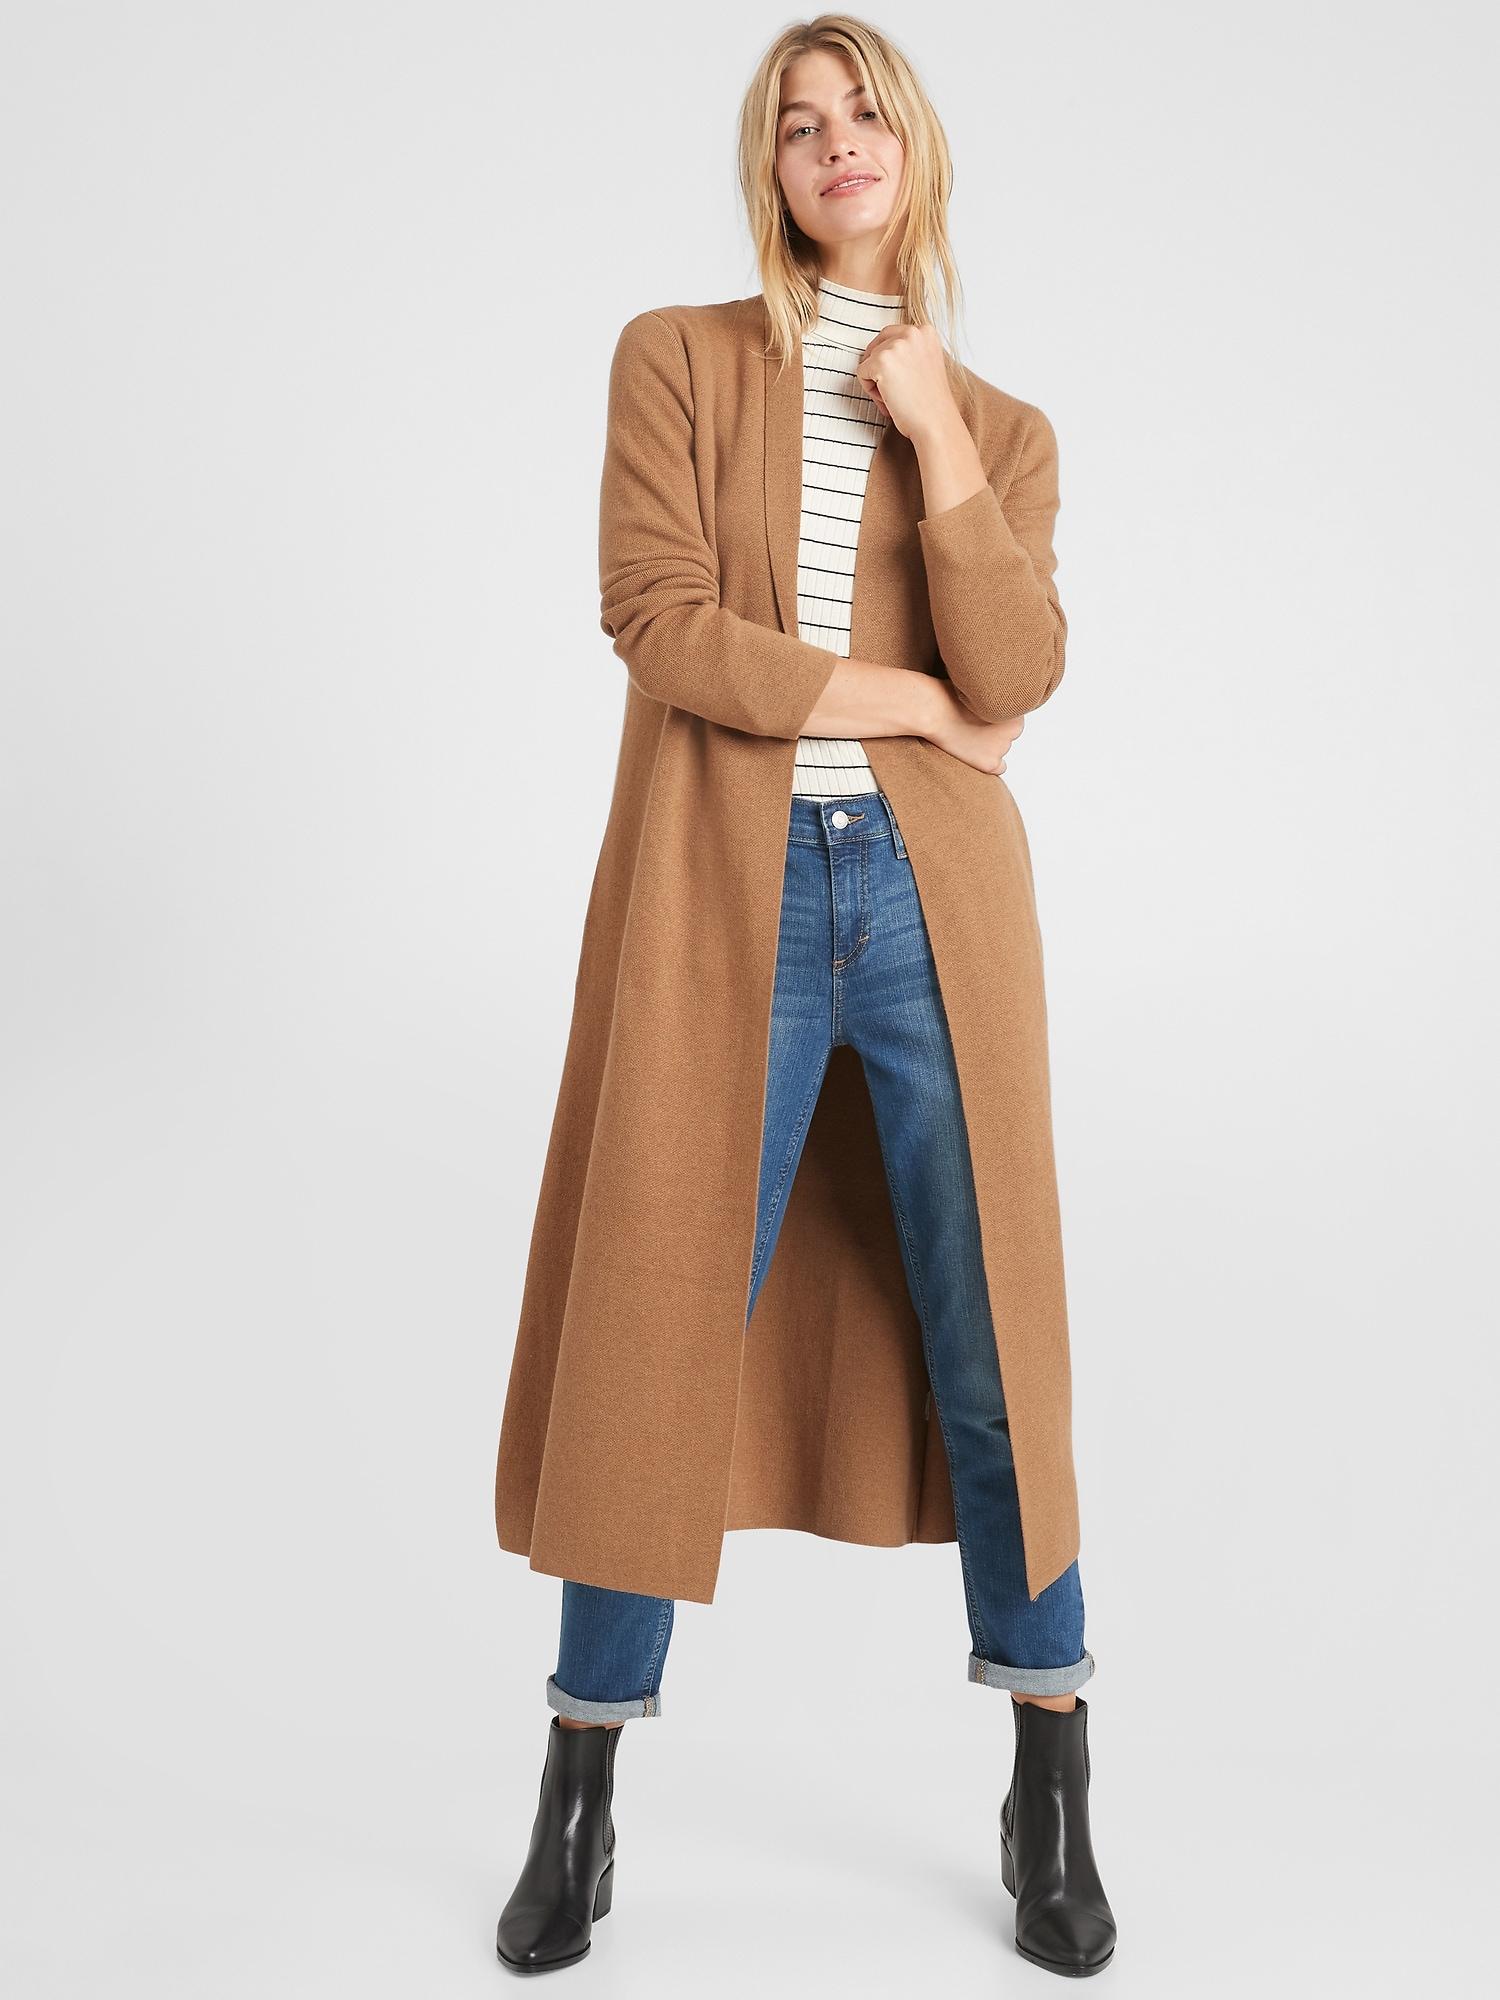 Camel Sweater Coat La France, SAVE 59% - eagleflair.com